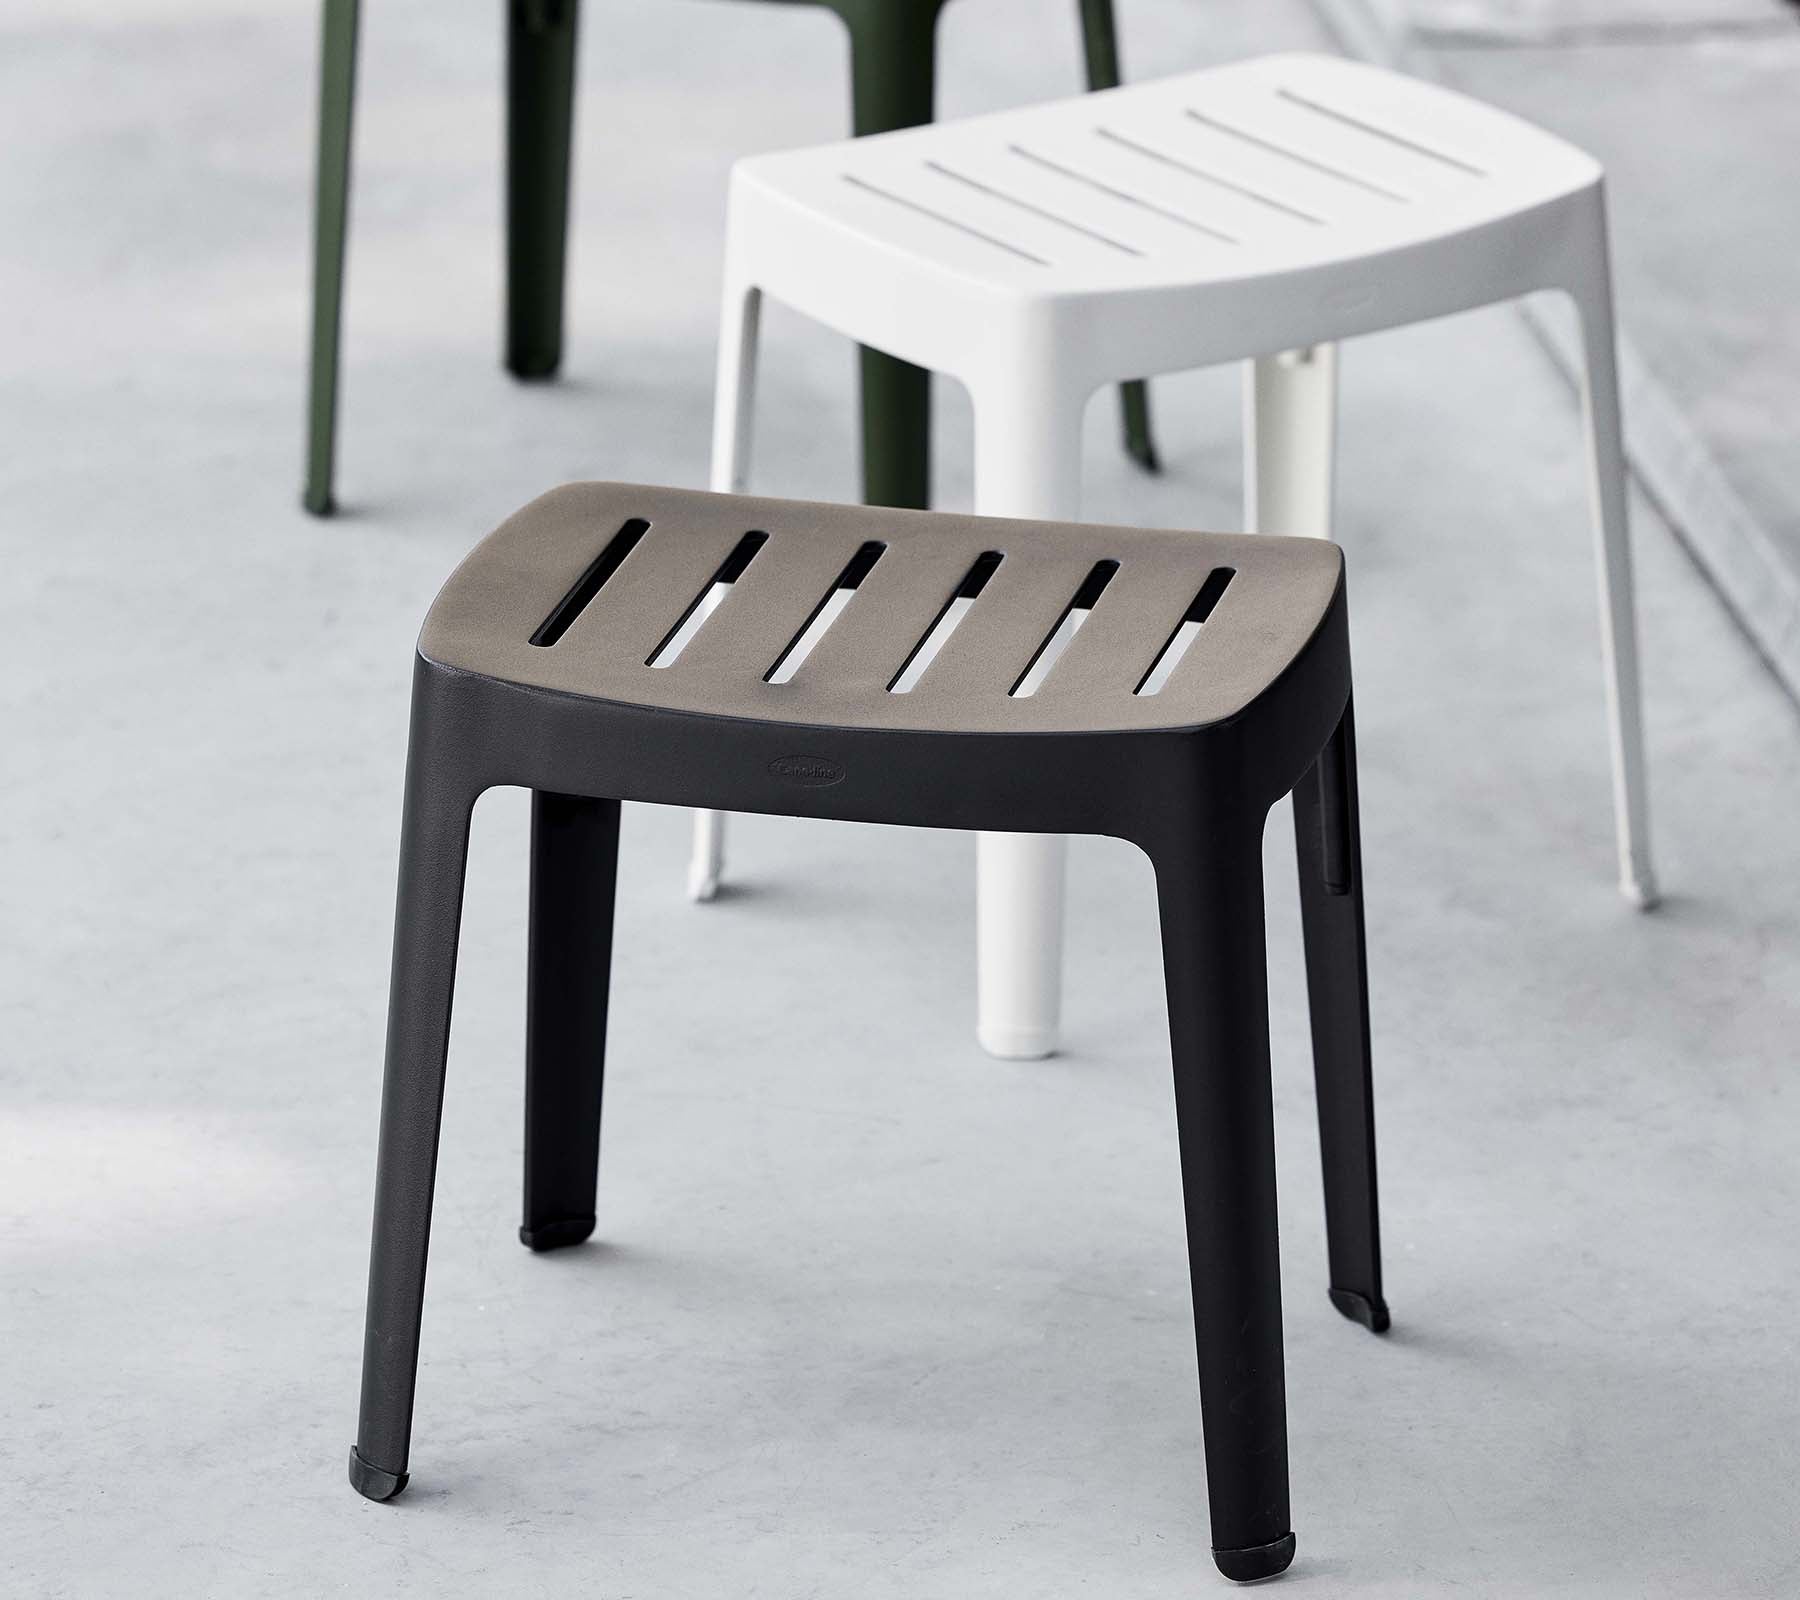 Cane-Line - Cut stool